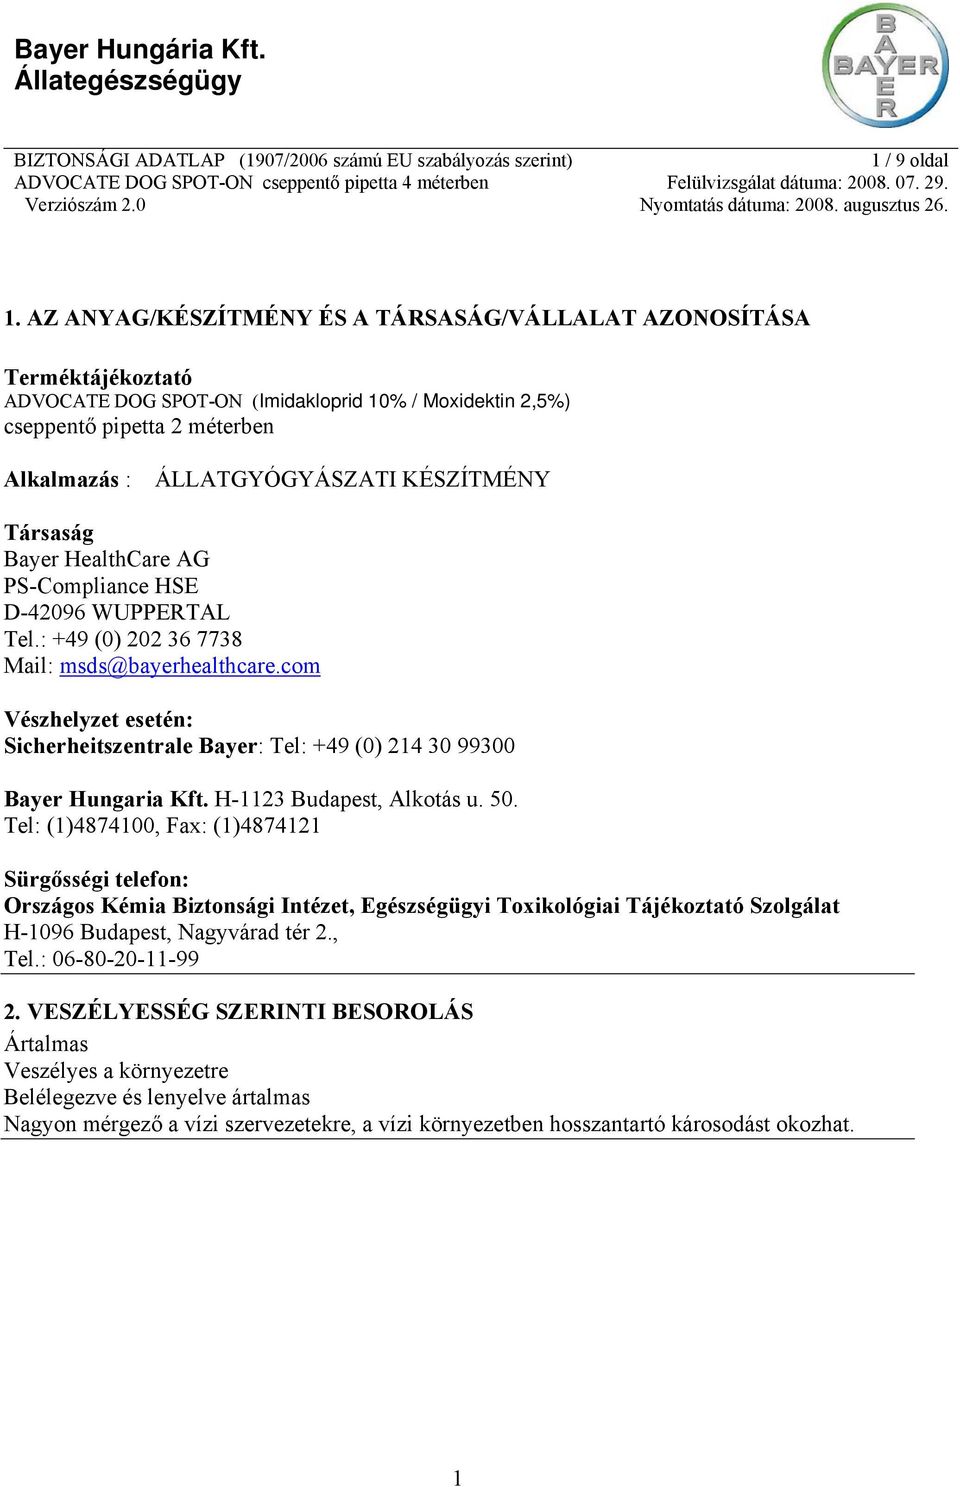 HealthCare AG PS-Compliance HSE D-42096 WUPPERTAL Tel.: +49 (0) 202 36 7738 Mail: msds@bayerhealthcare.com Vészhelyzet esetén: Sicherheitszentrale Bayer: Tel: +49 (0) 214 30 99300 Bayer Hungaria Kft.